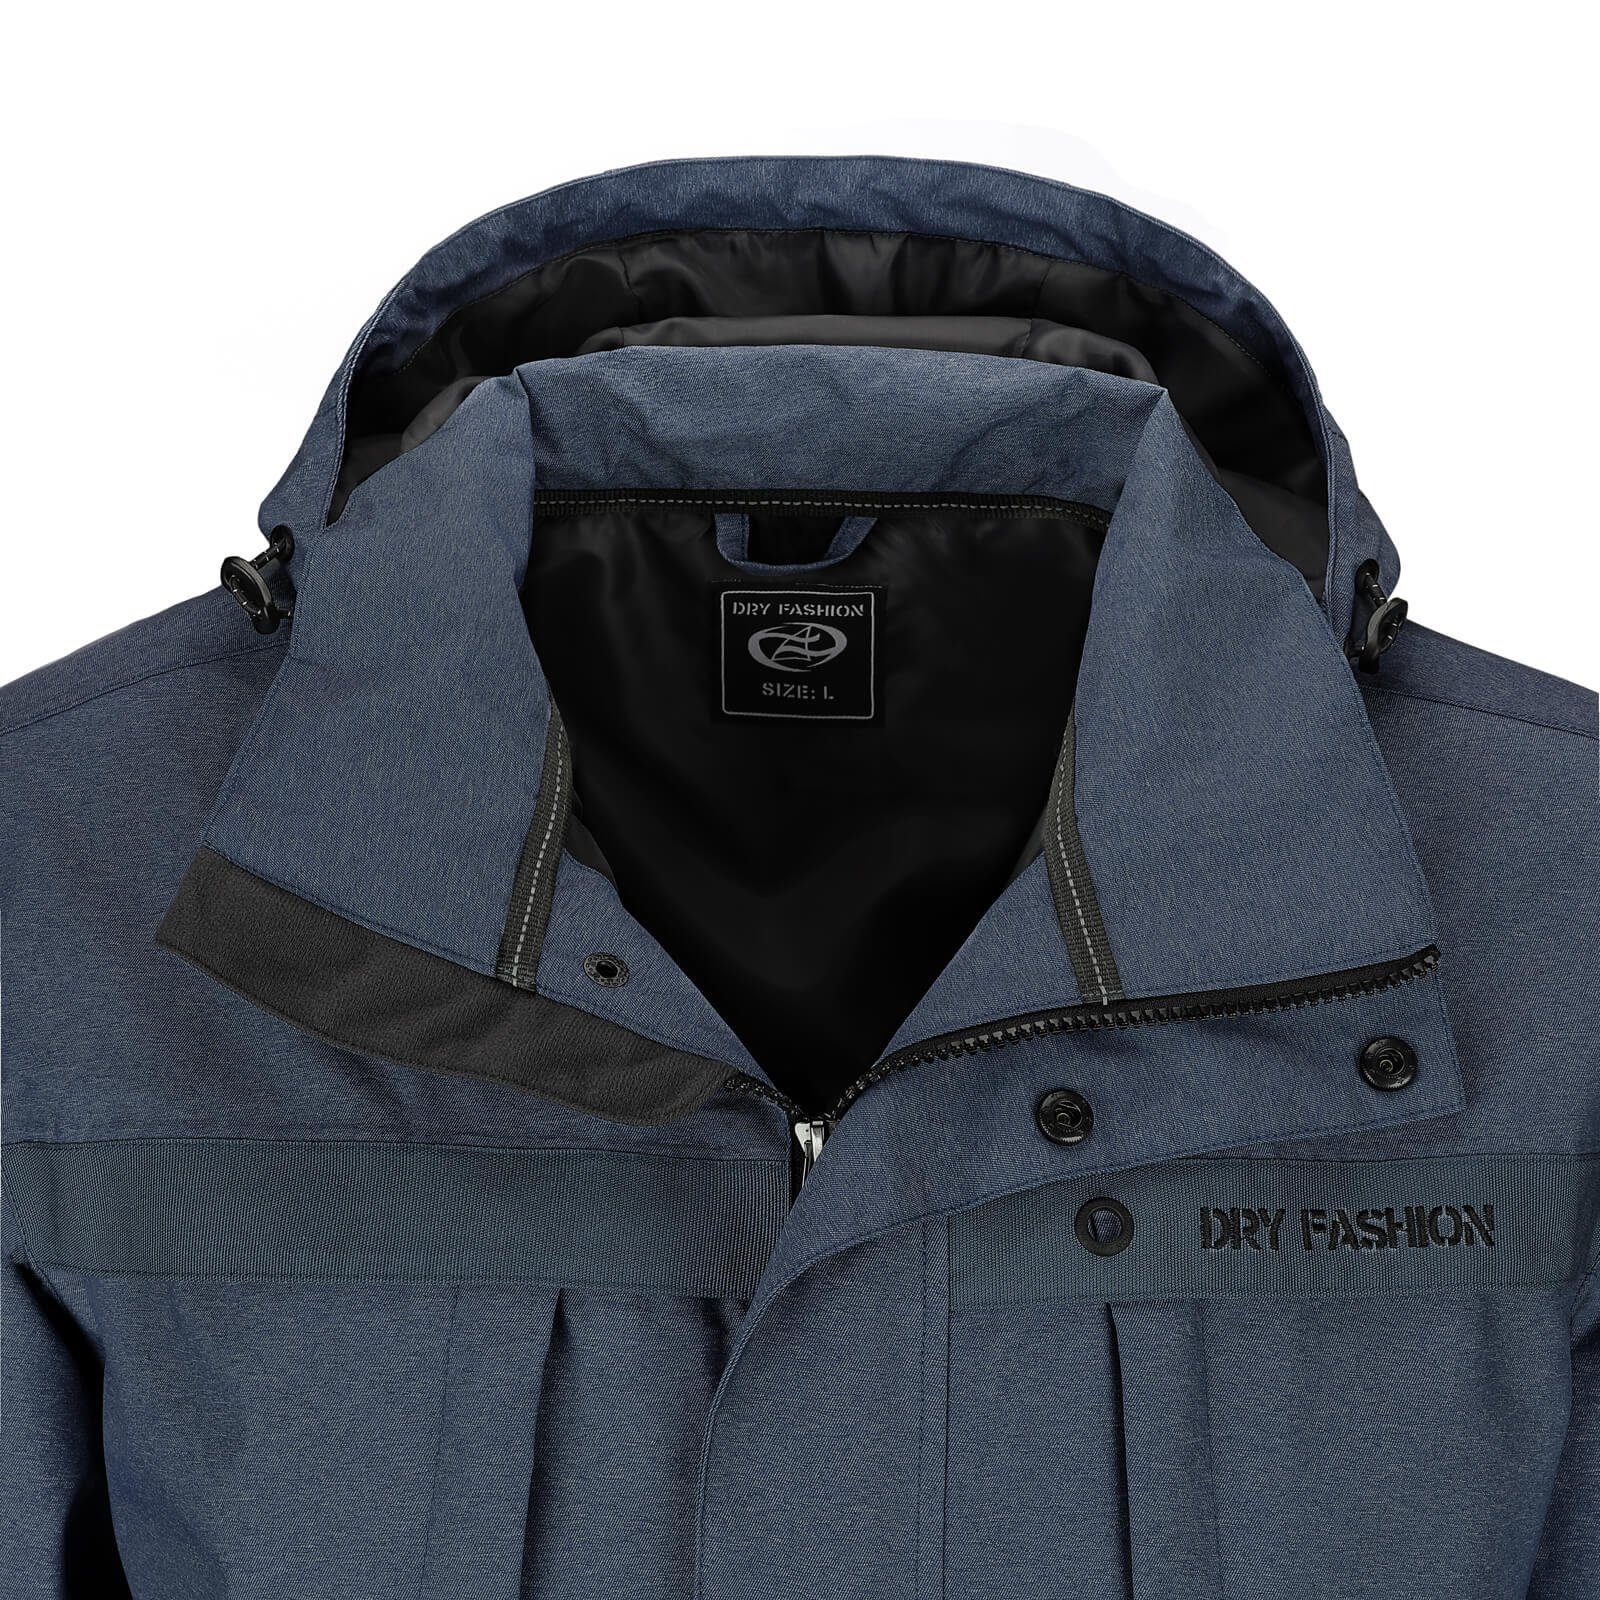 Fashion Dry Wasserdicht - Emden Funktionsjacke Outdoor-Jacke Herren Meliert Innenfutter melange Jacke navy mit